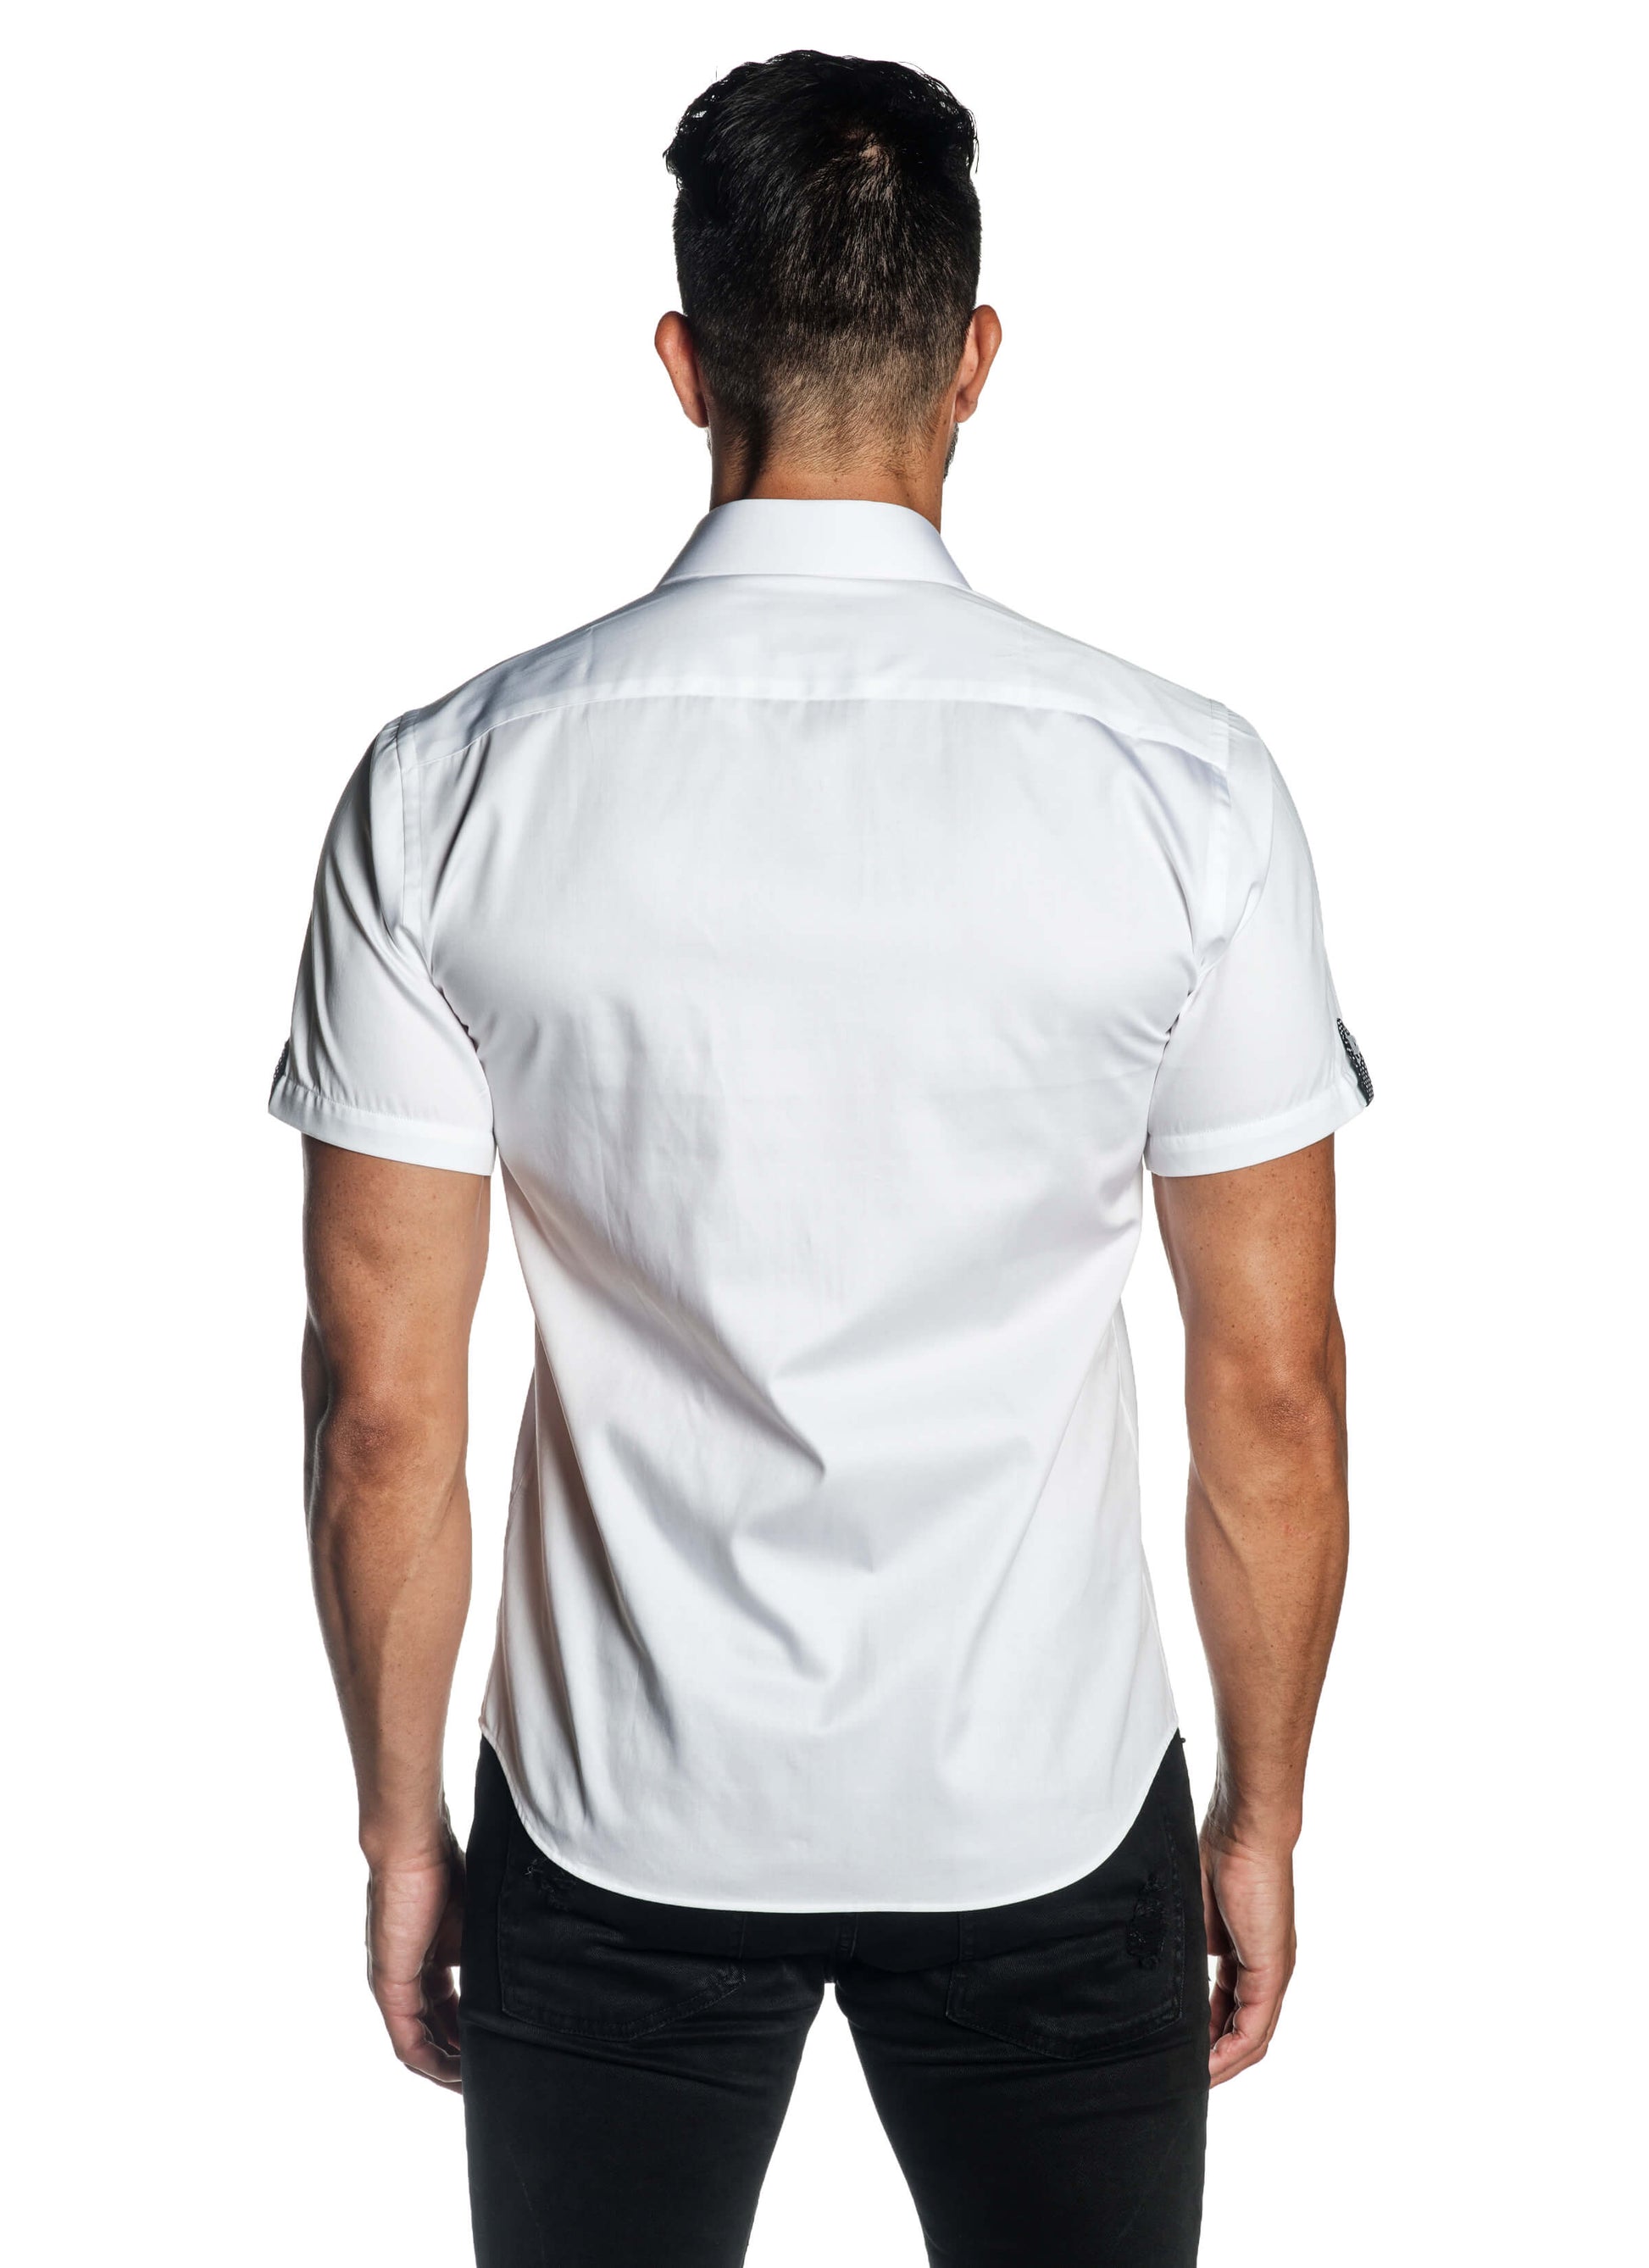 White Solid Shot Sleeve Shirt for Men T-3562-SS - Back - Jared Lang